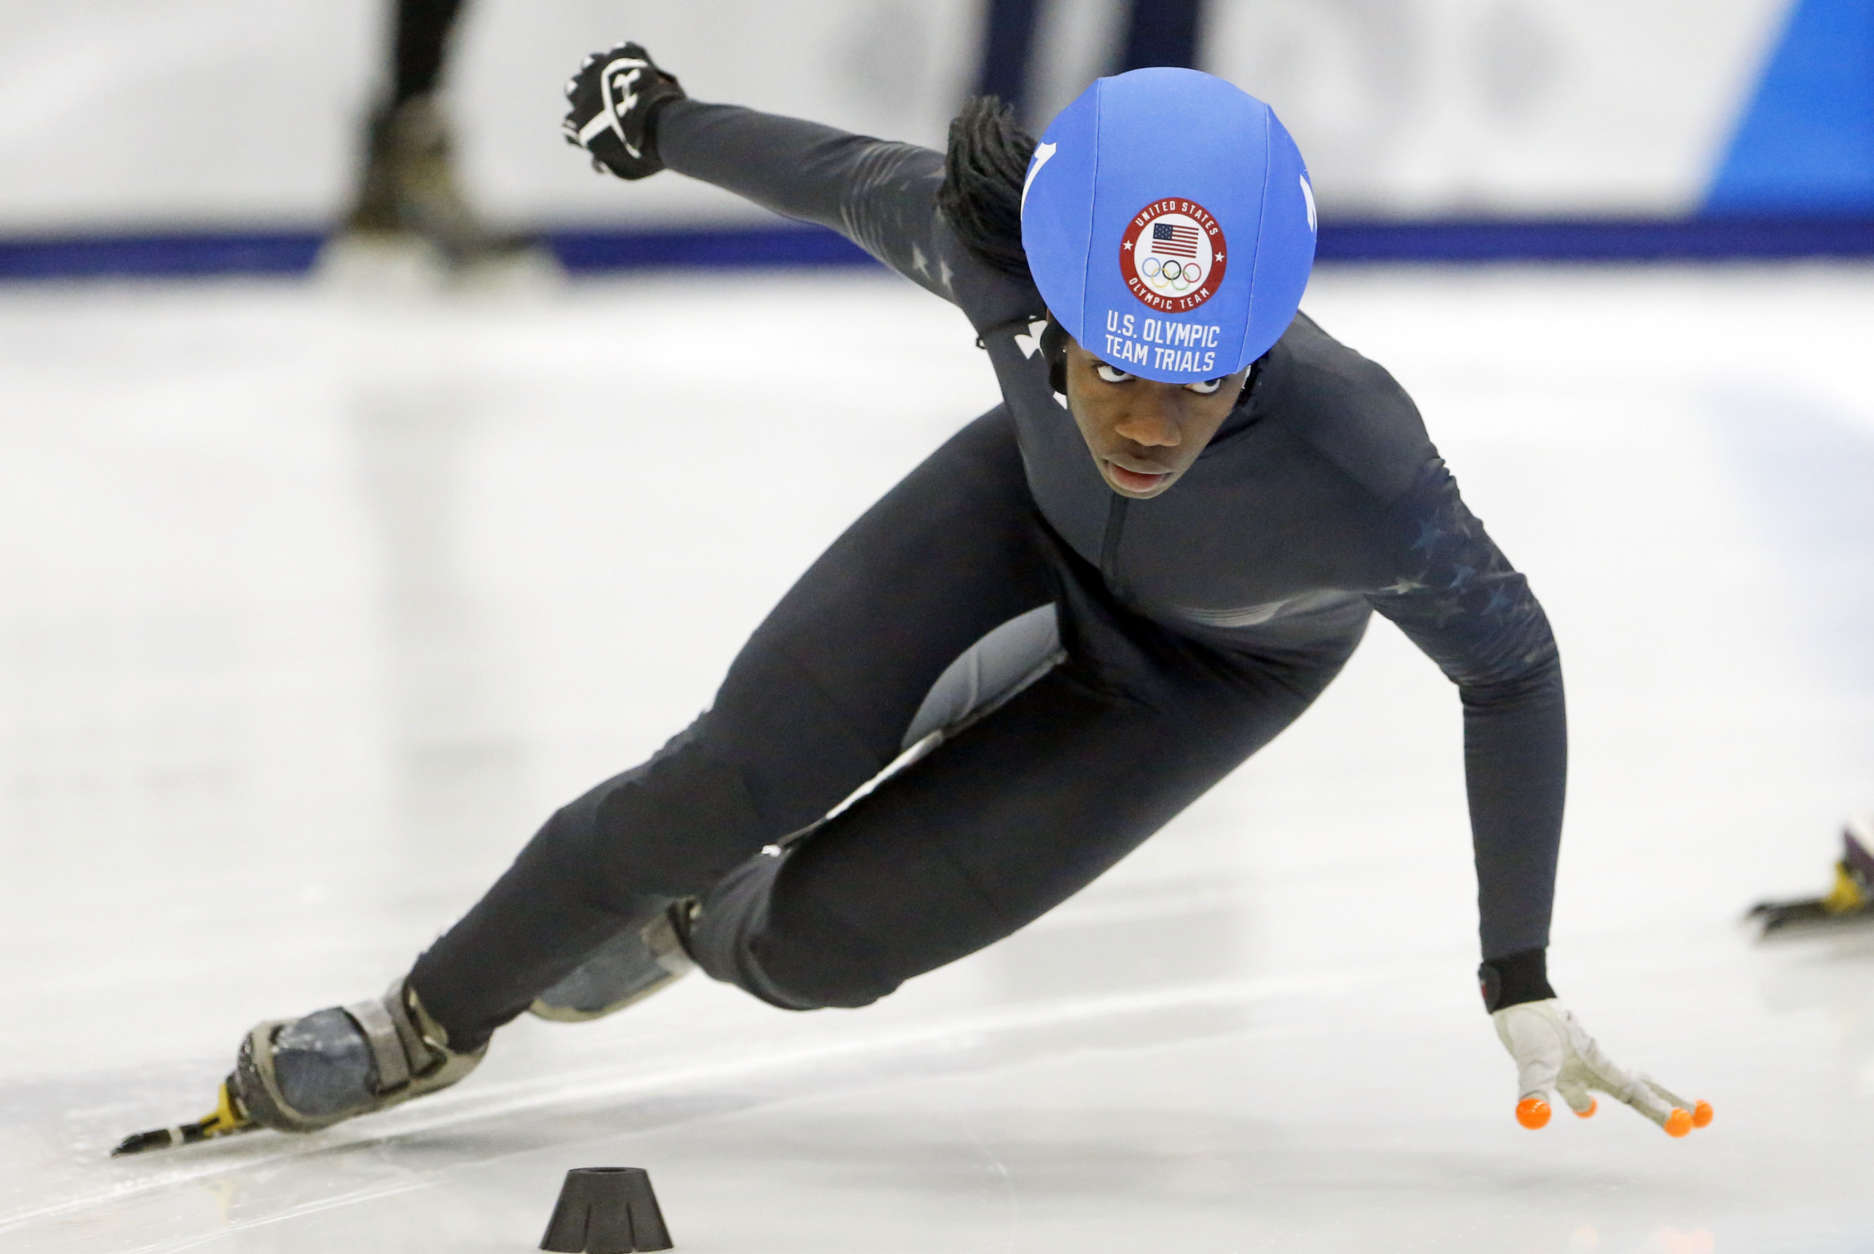 Maame Biney (1) competes in the women's 1000-meter during the U.S.Olympic short track speedskating trials Sunday, Dec. 17, 2017, in Kearns, Utah. (AP Photo/Rick Bowmer)